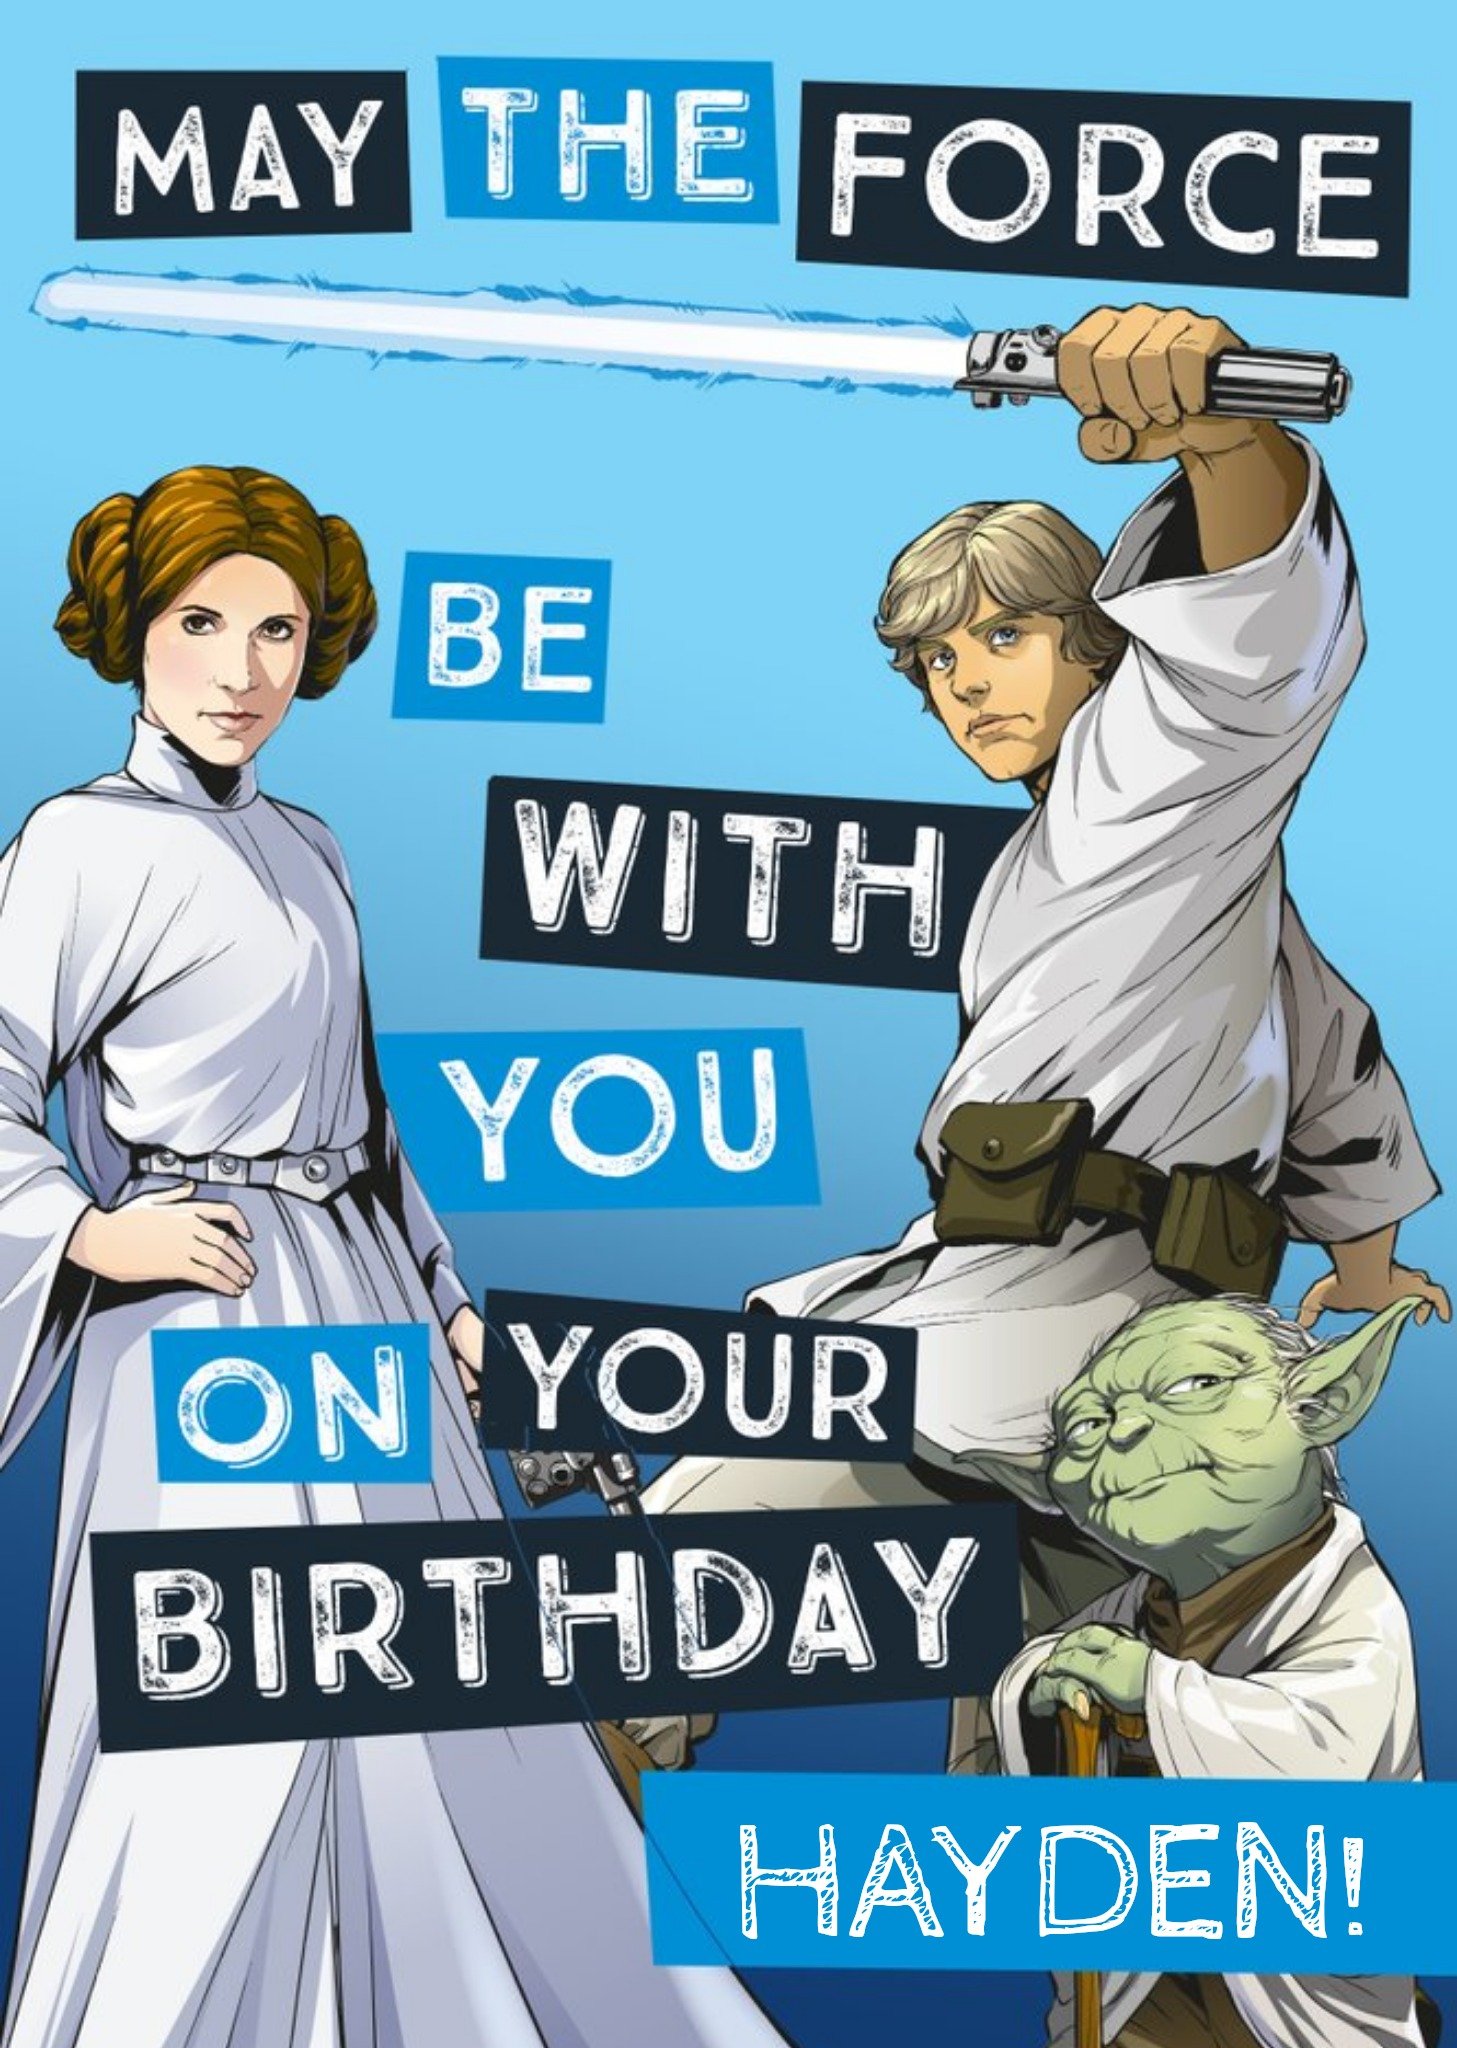 Disney Star Wars Birthday Card - Princess Leia - Luke Skywalker - Yoda Ecard